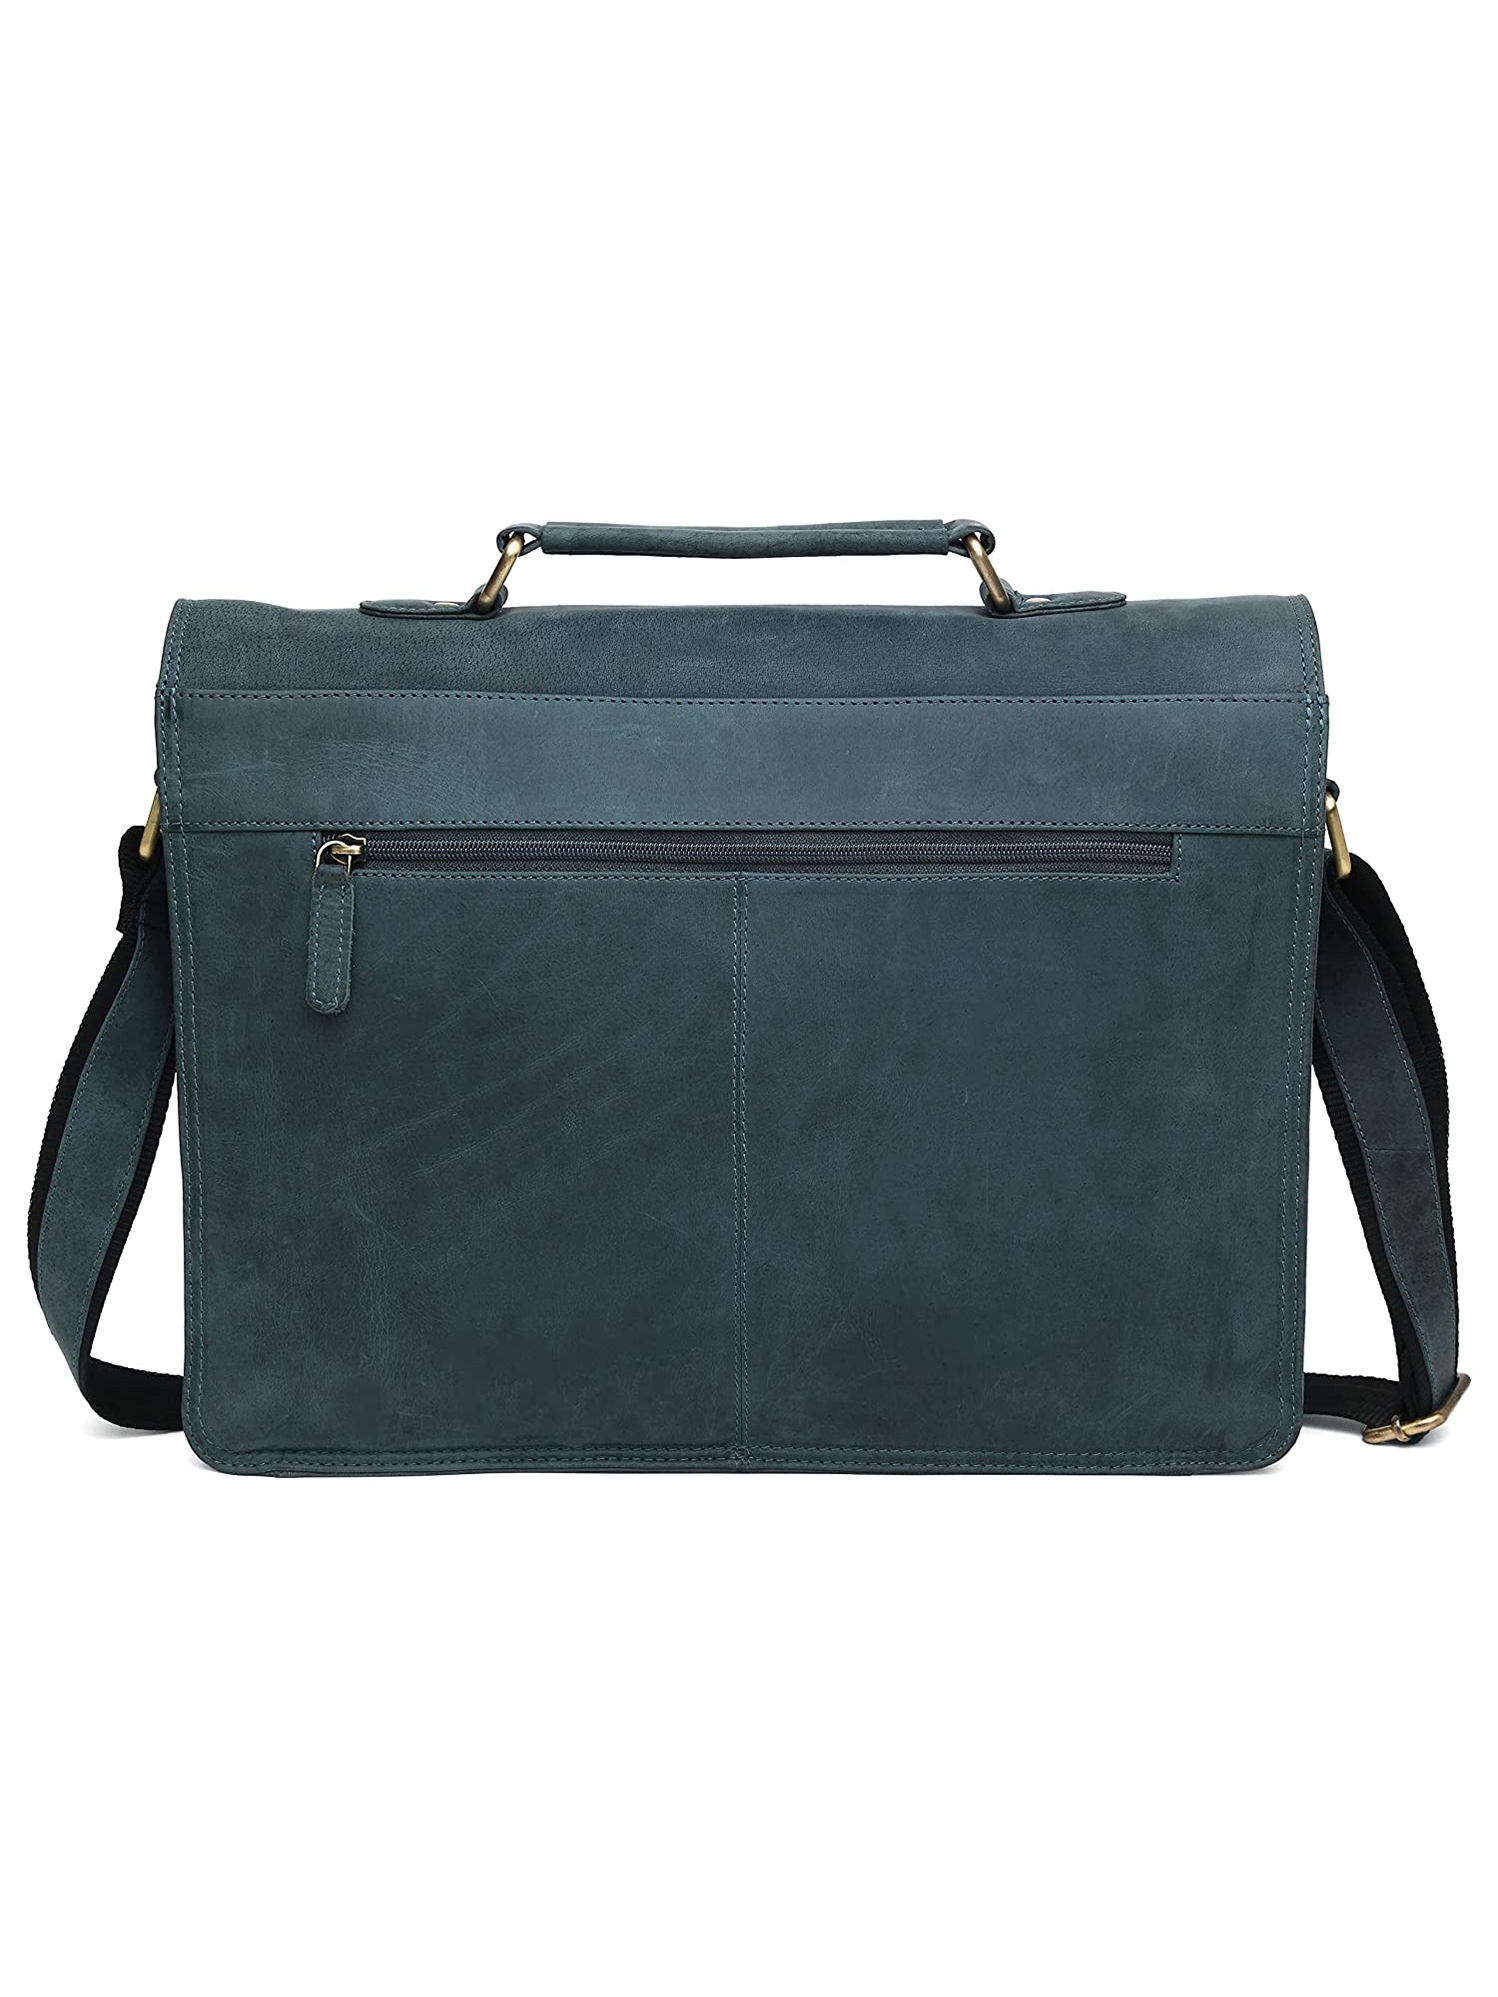 WildHorn 100% Genuine Classic Leather Blue Laptop Bag for Men